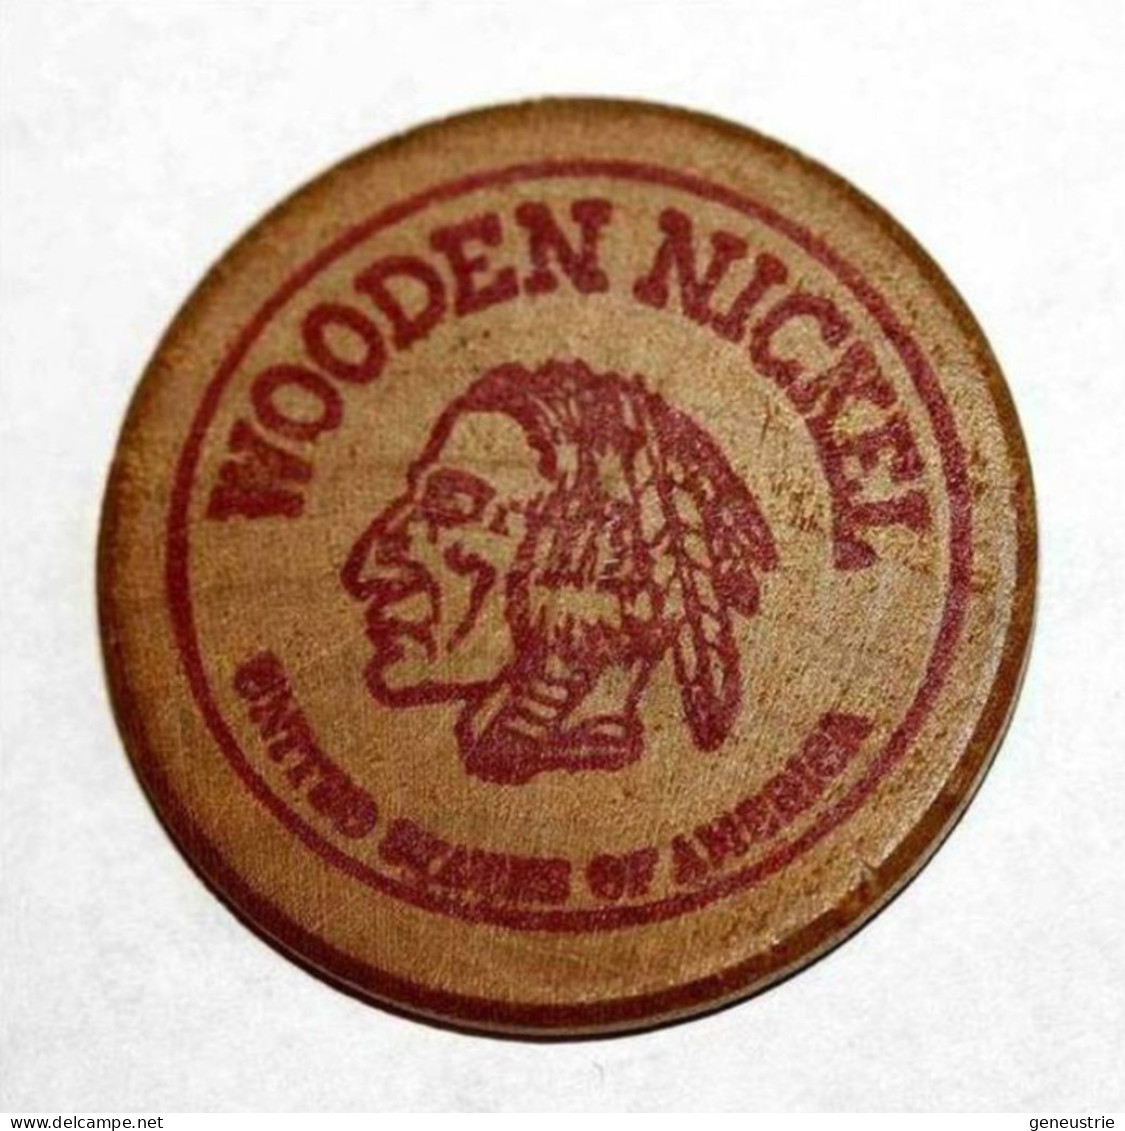 Wooden Token 1$ - Wooden Nickel - Jeton Bois Monnaie Nécessité - Tête D'Indien - One Dollar - Etats-Unis - Monetari/ Di Necessità